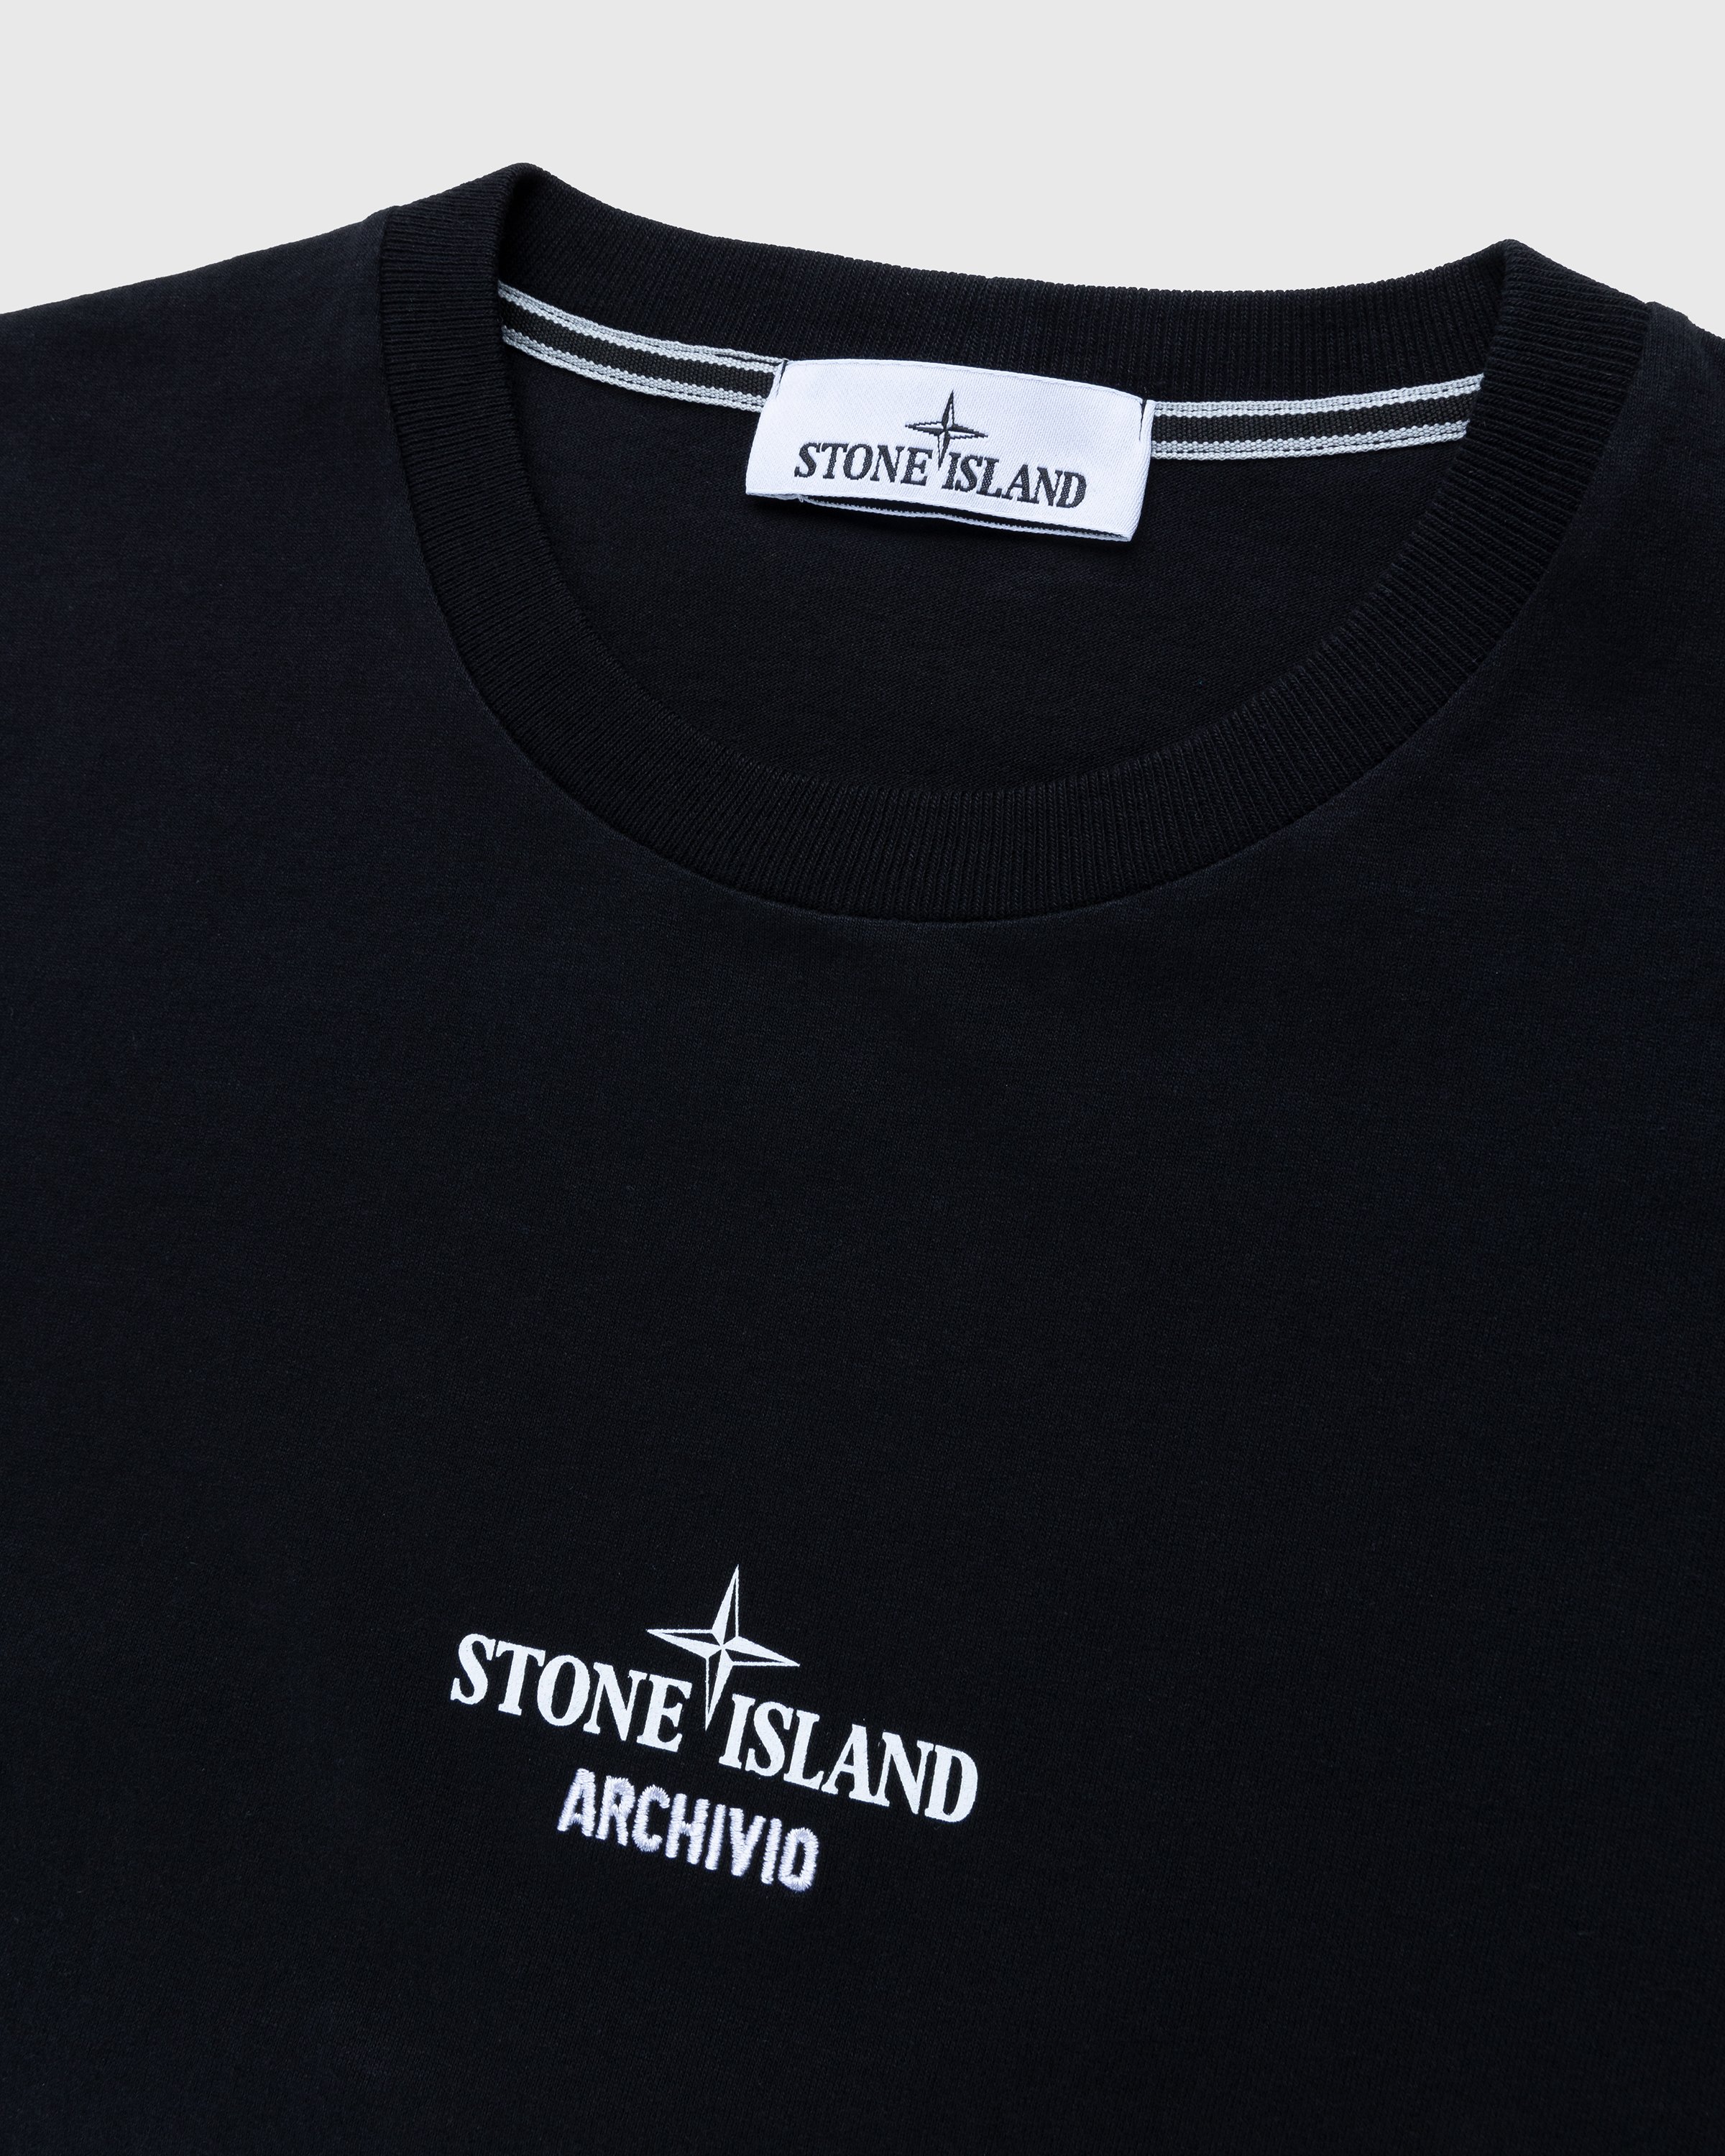 Stone Island - Archivio T-Shirt Black - Clothing - Black - Image 5